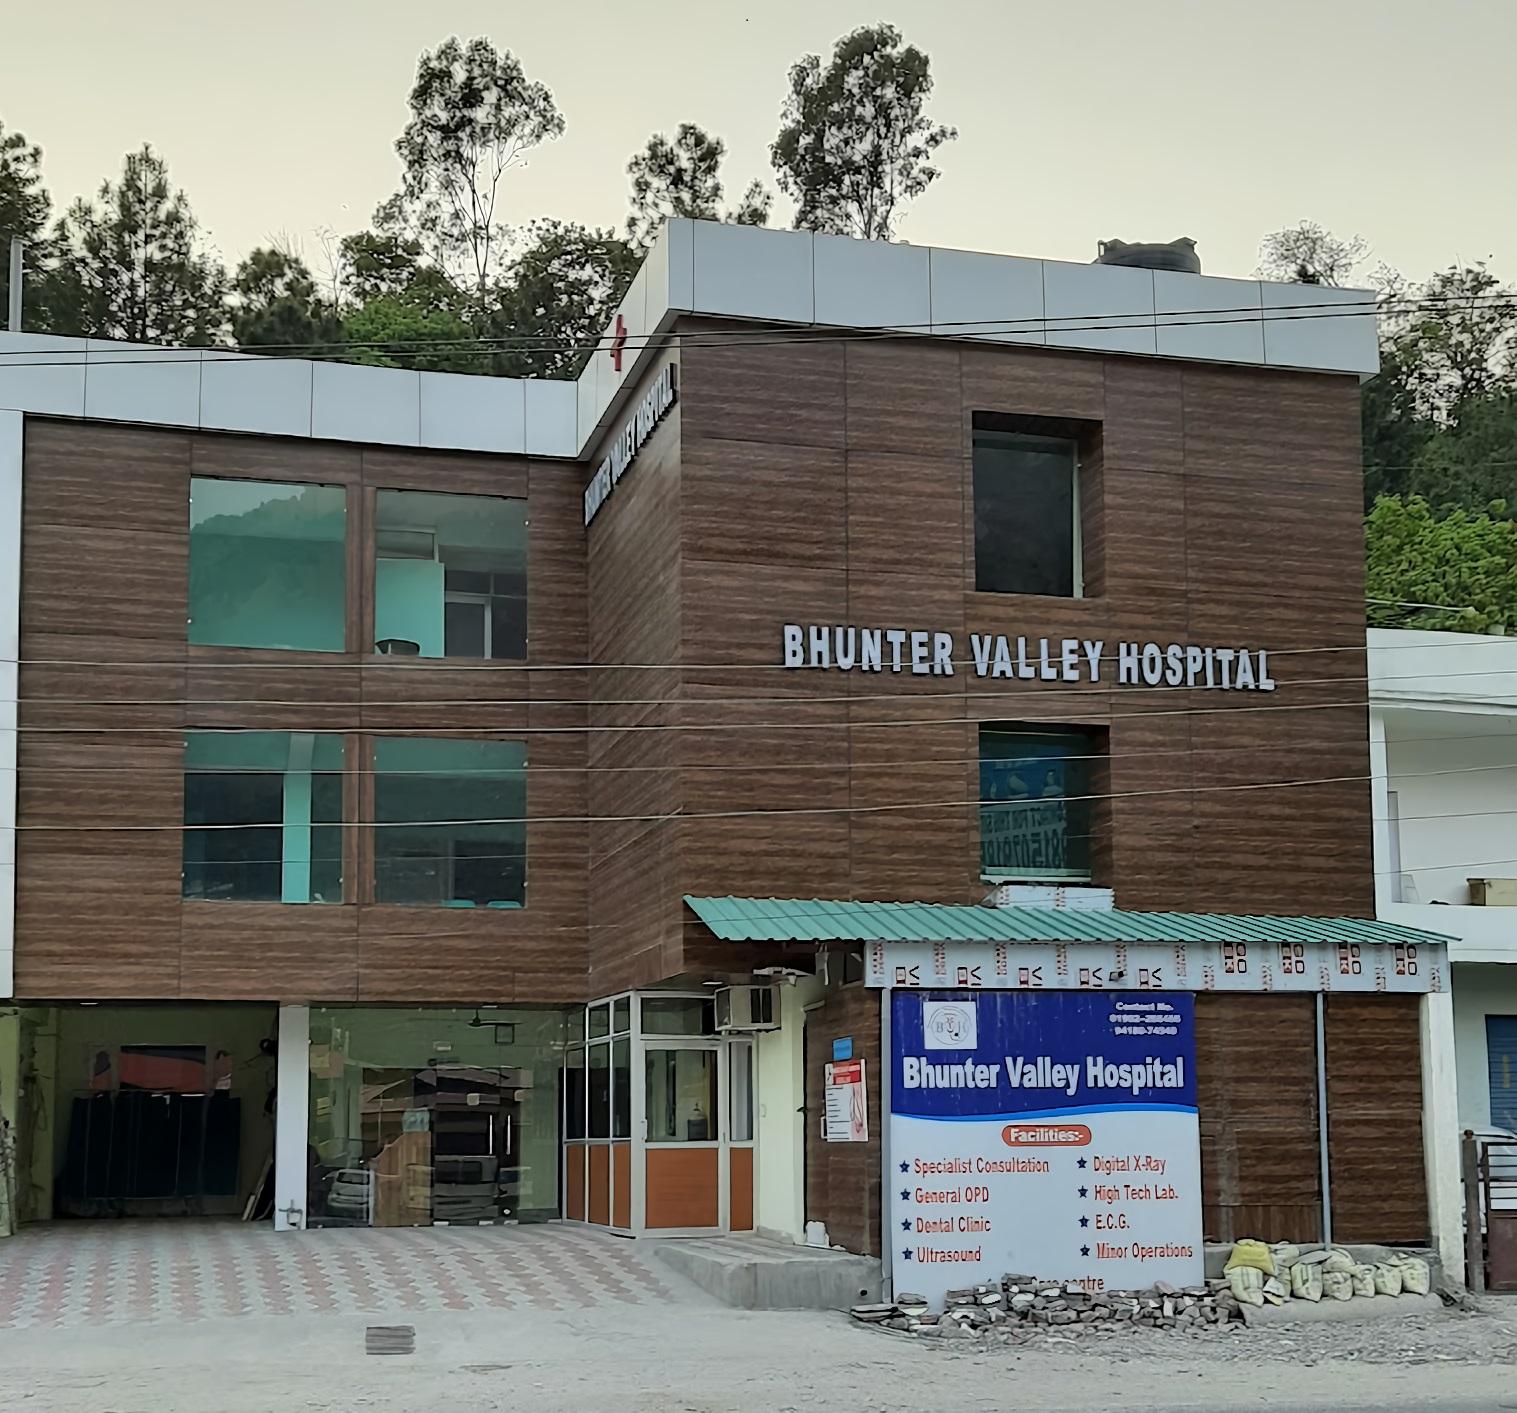 Bhunter Valley Hospital